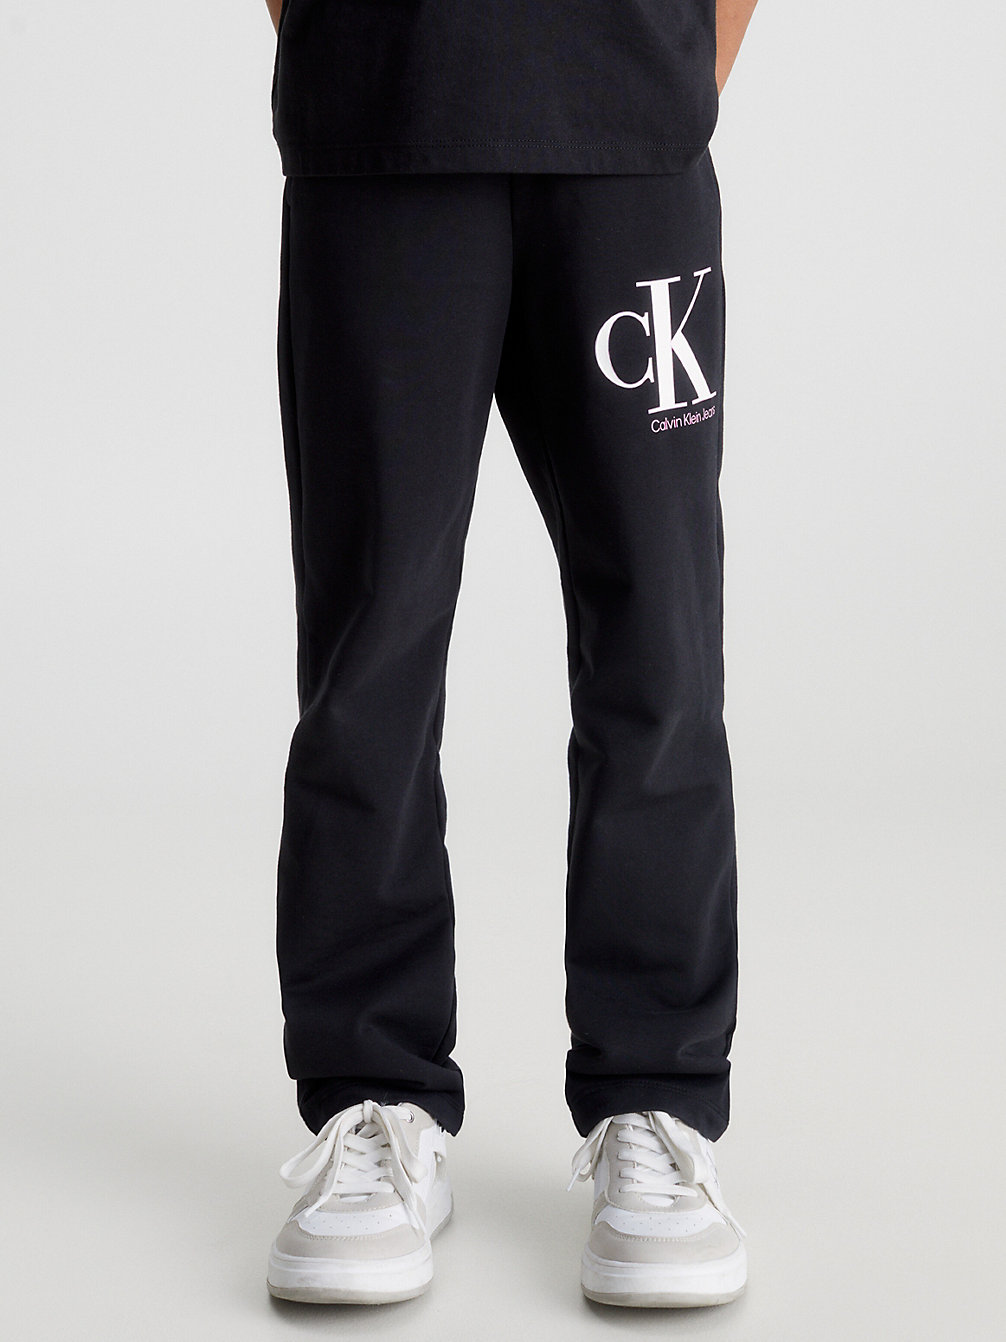 CK BLACK Logo-Jogginghose undefined Maedchen Calvin Klein